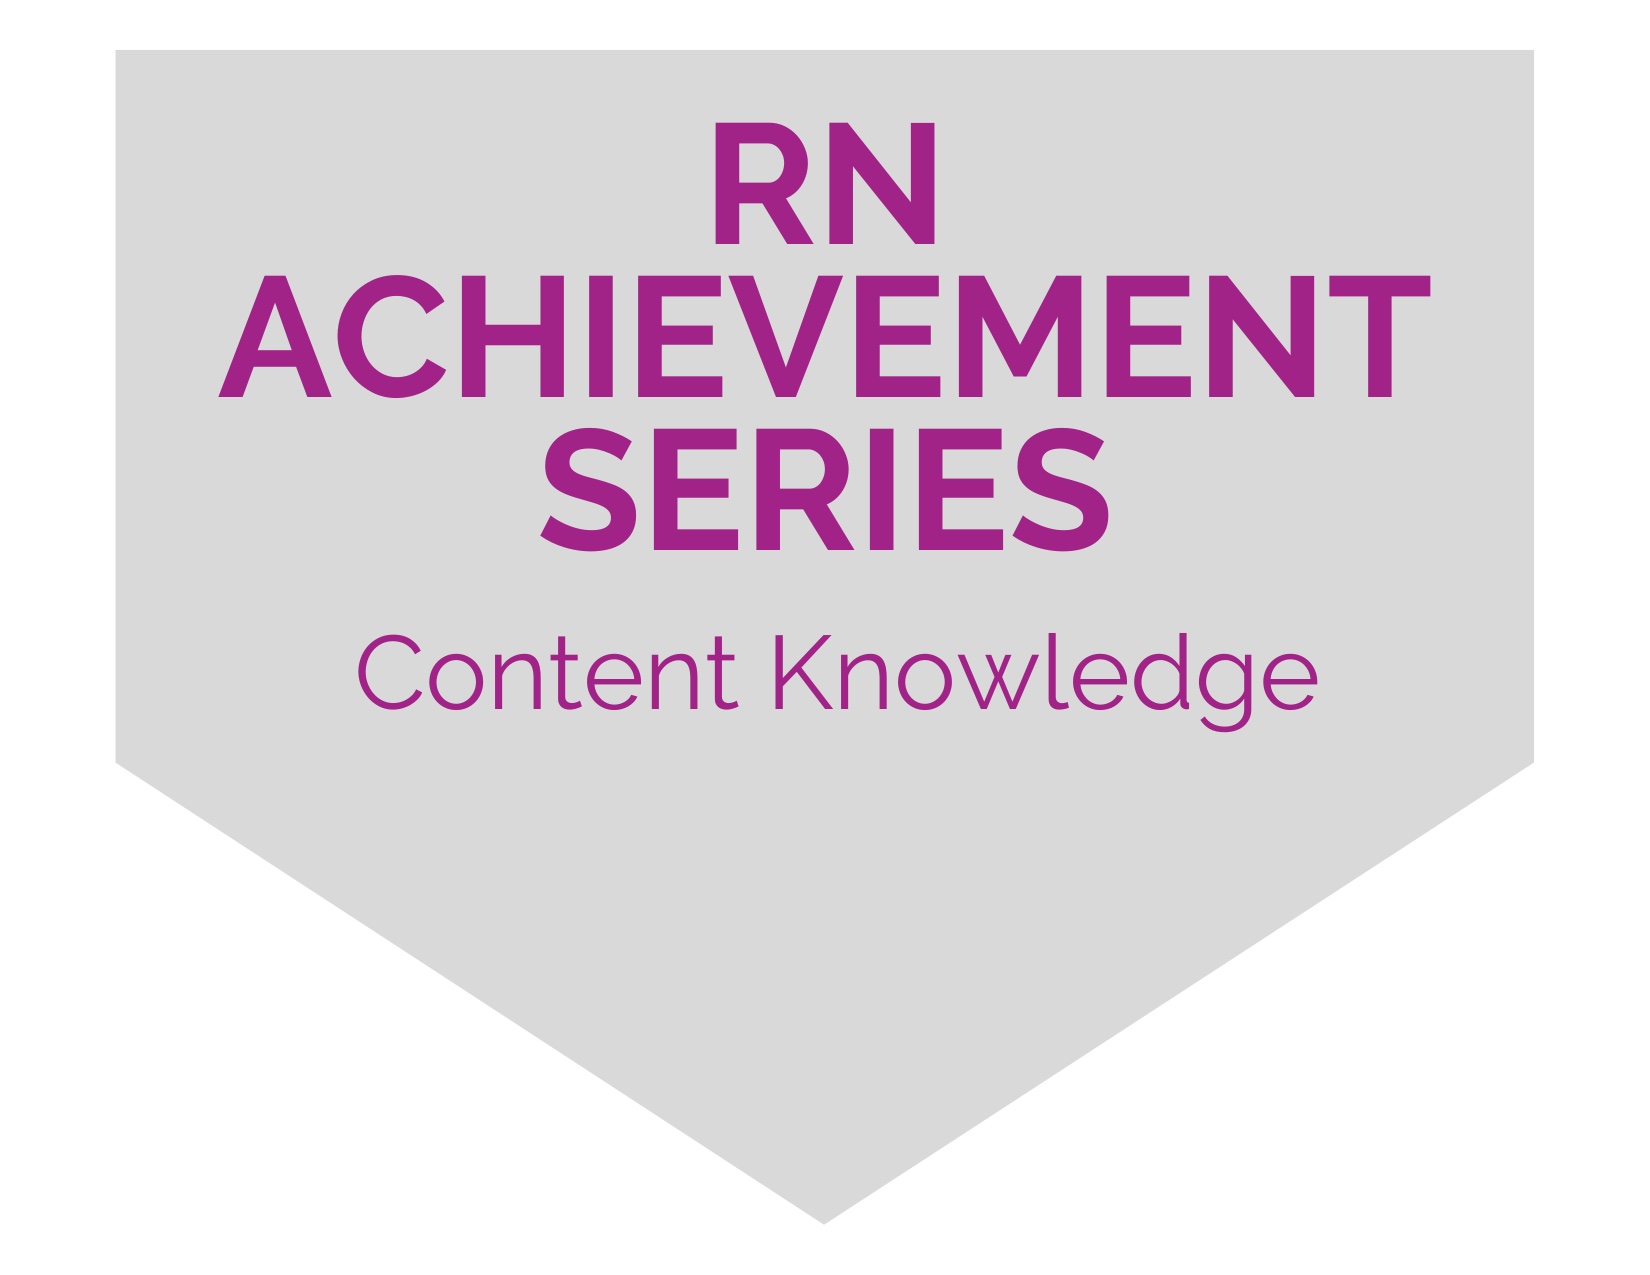 RN Achievement Series Image - Gray